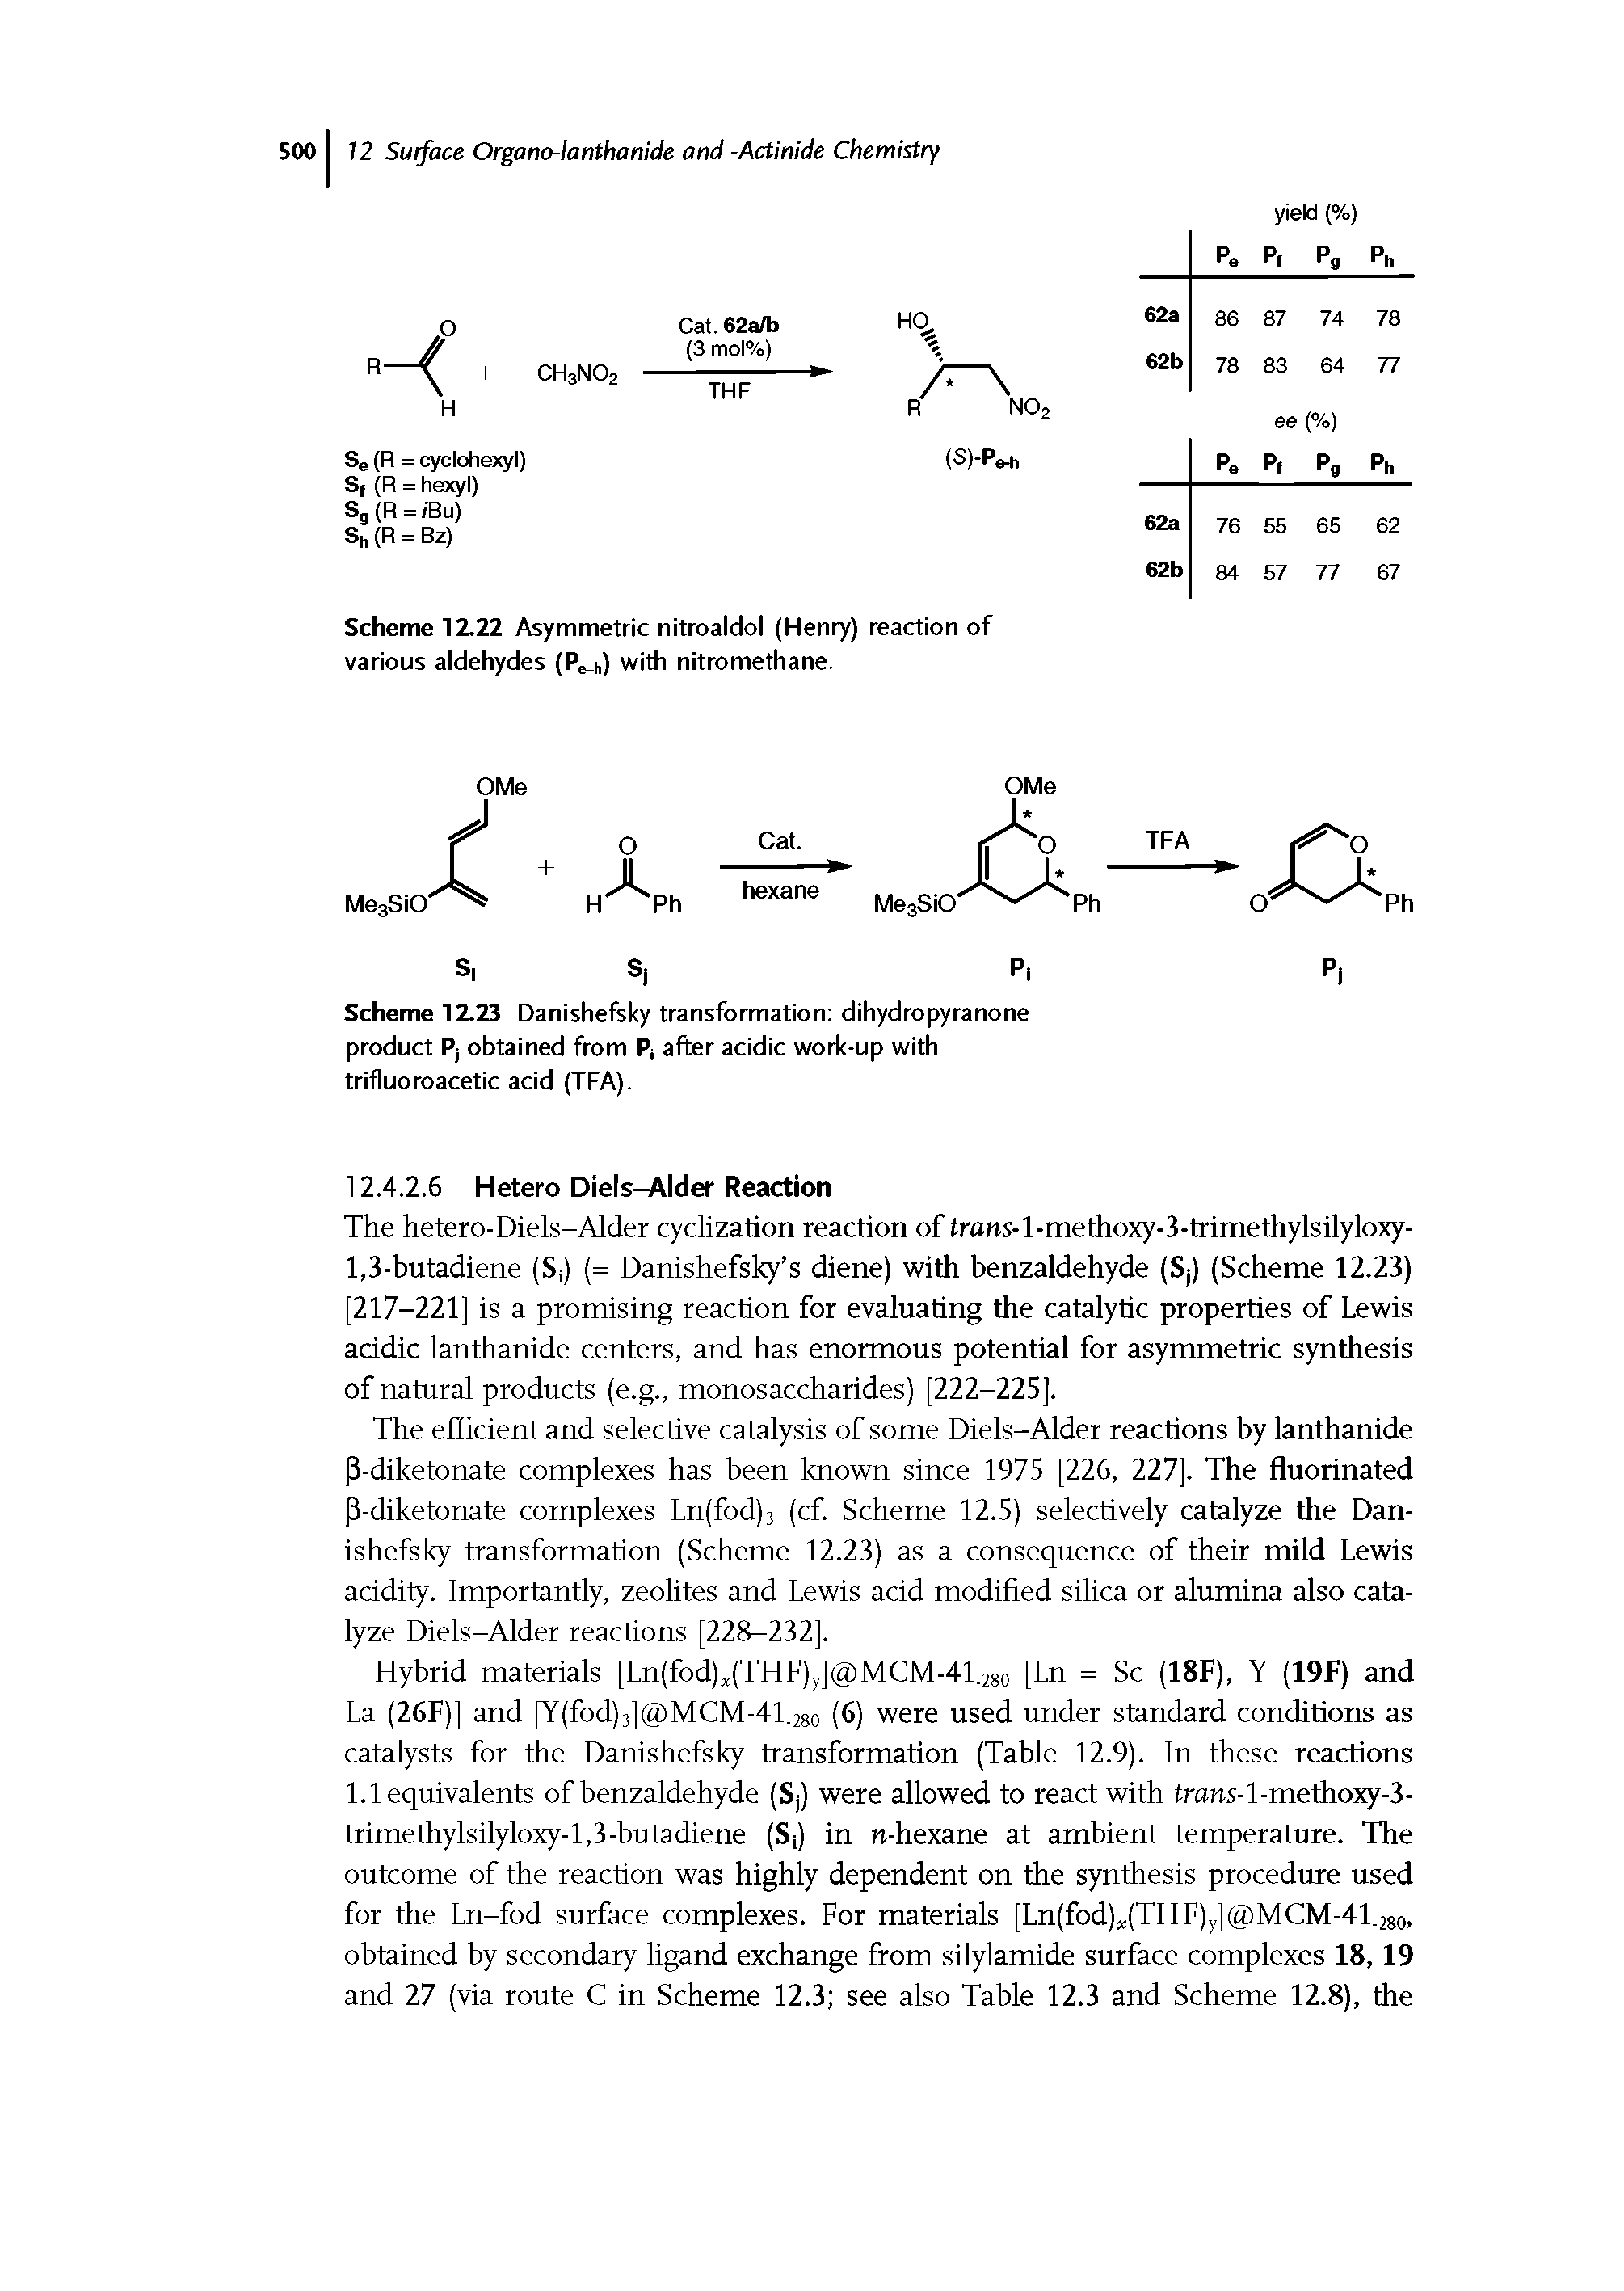 Scheme 12.22 Asymmetric nitroaldol (Henry) reaction of various aldehydes (Pe-h) with nitromethane.